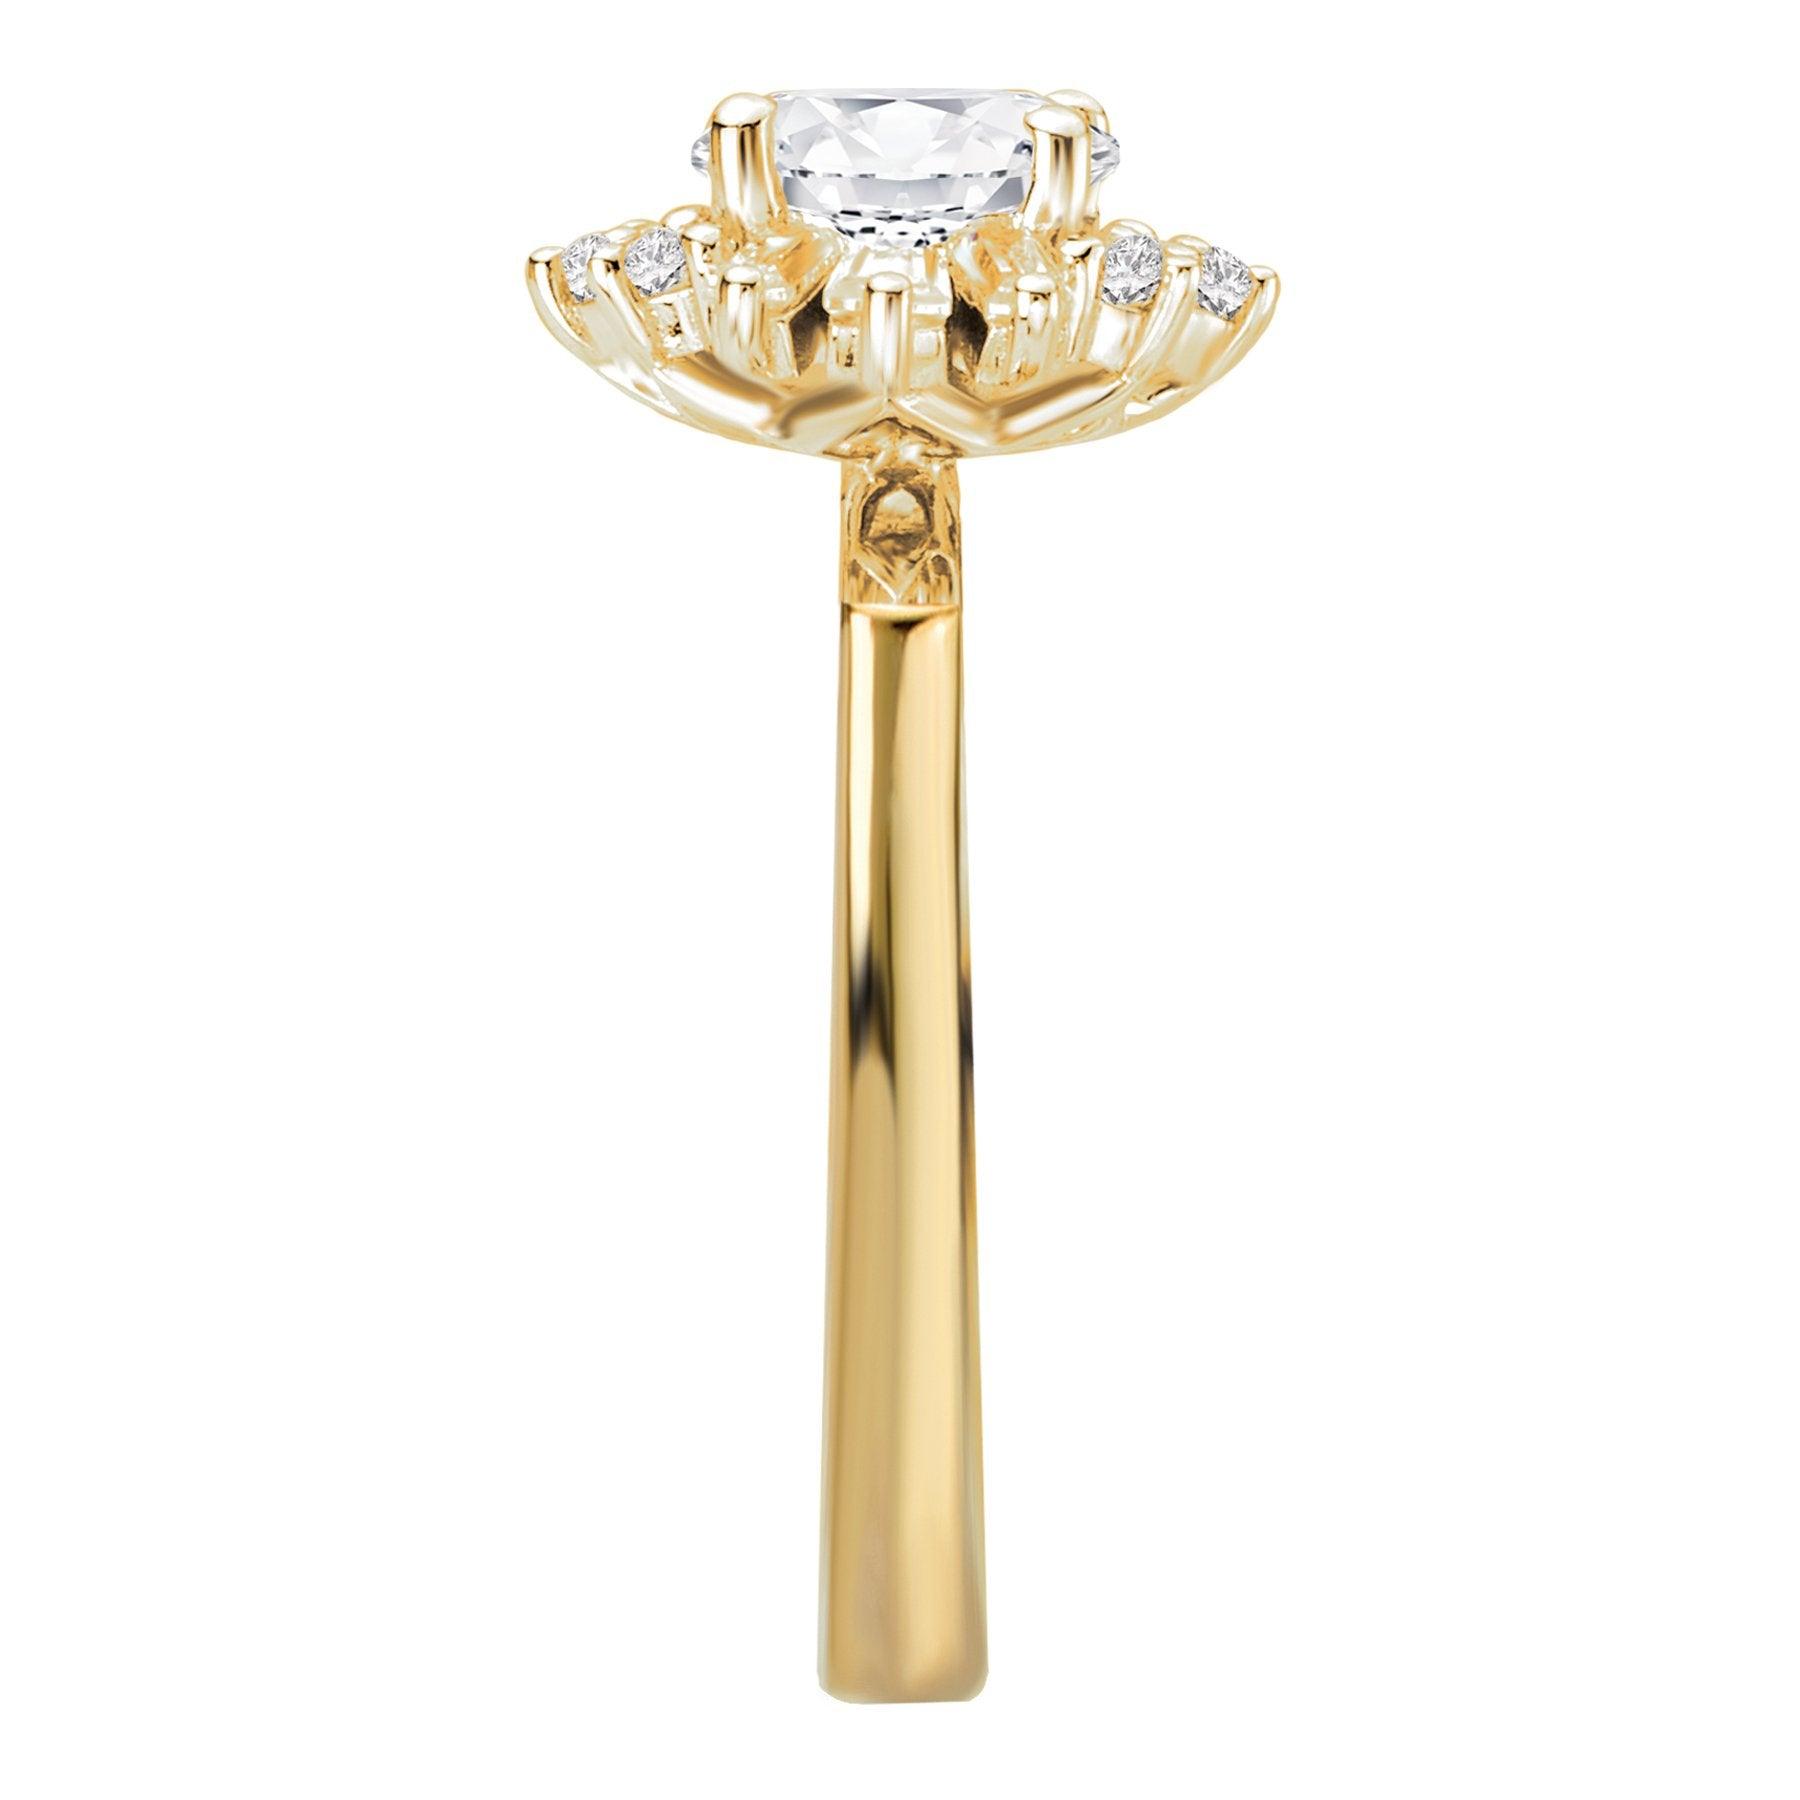 BW JAMES Engagement Rings "The Paris" Ballerina Style Halo Semi-Mount Diamond Ring